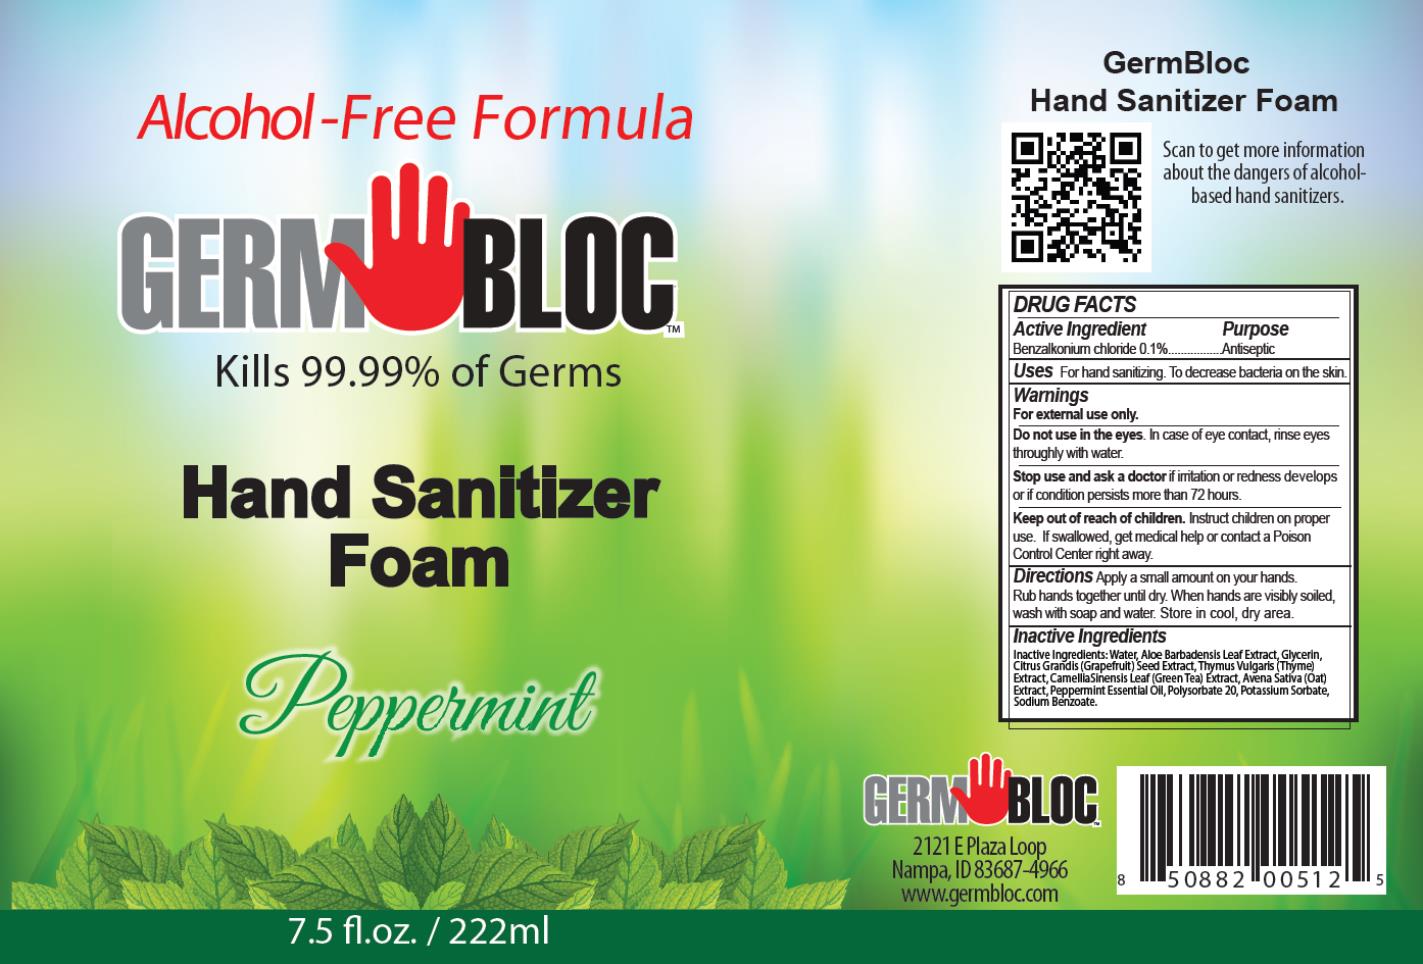 PRINCIPAL DISPLAY PANEL
Alcohol-Free Formula
GERM BLOCTM
Kills 99.99% of Germs
Hand Sanitizer 
Foam
Peppermint
7.5 fl. oz. / 222 ml
